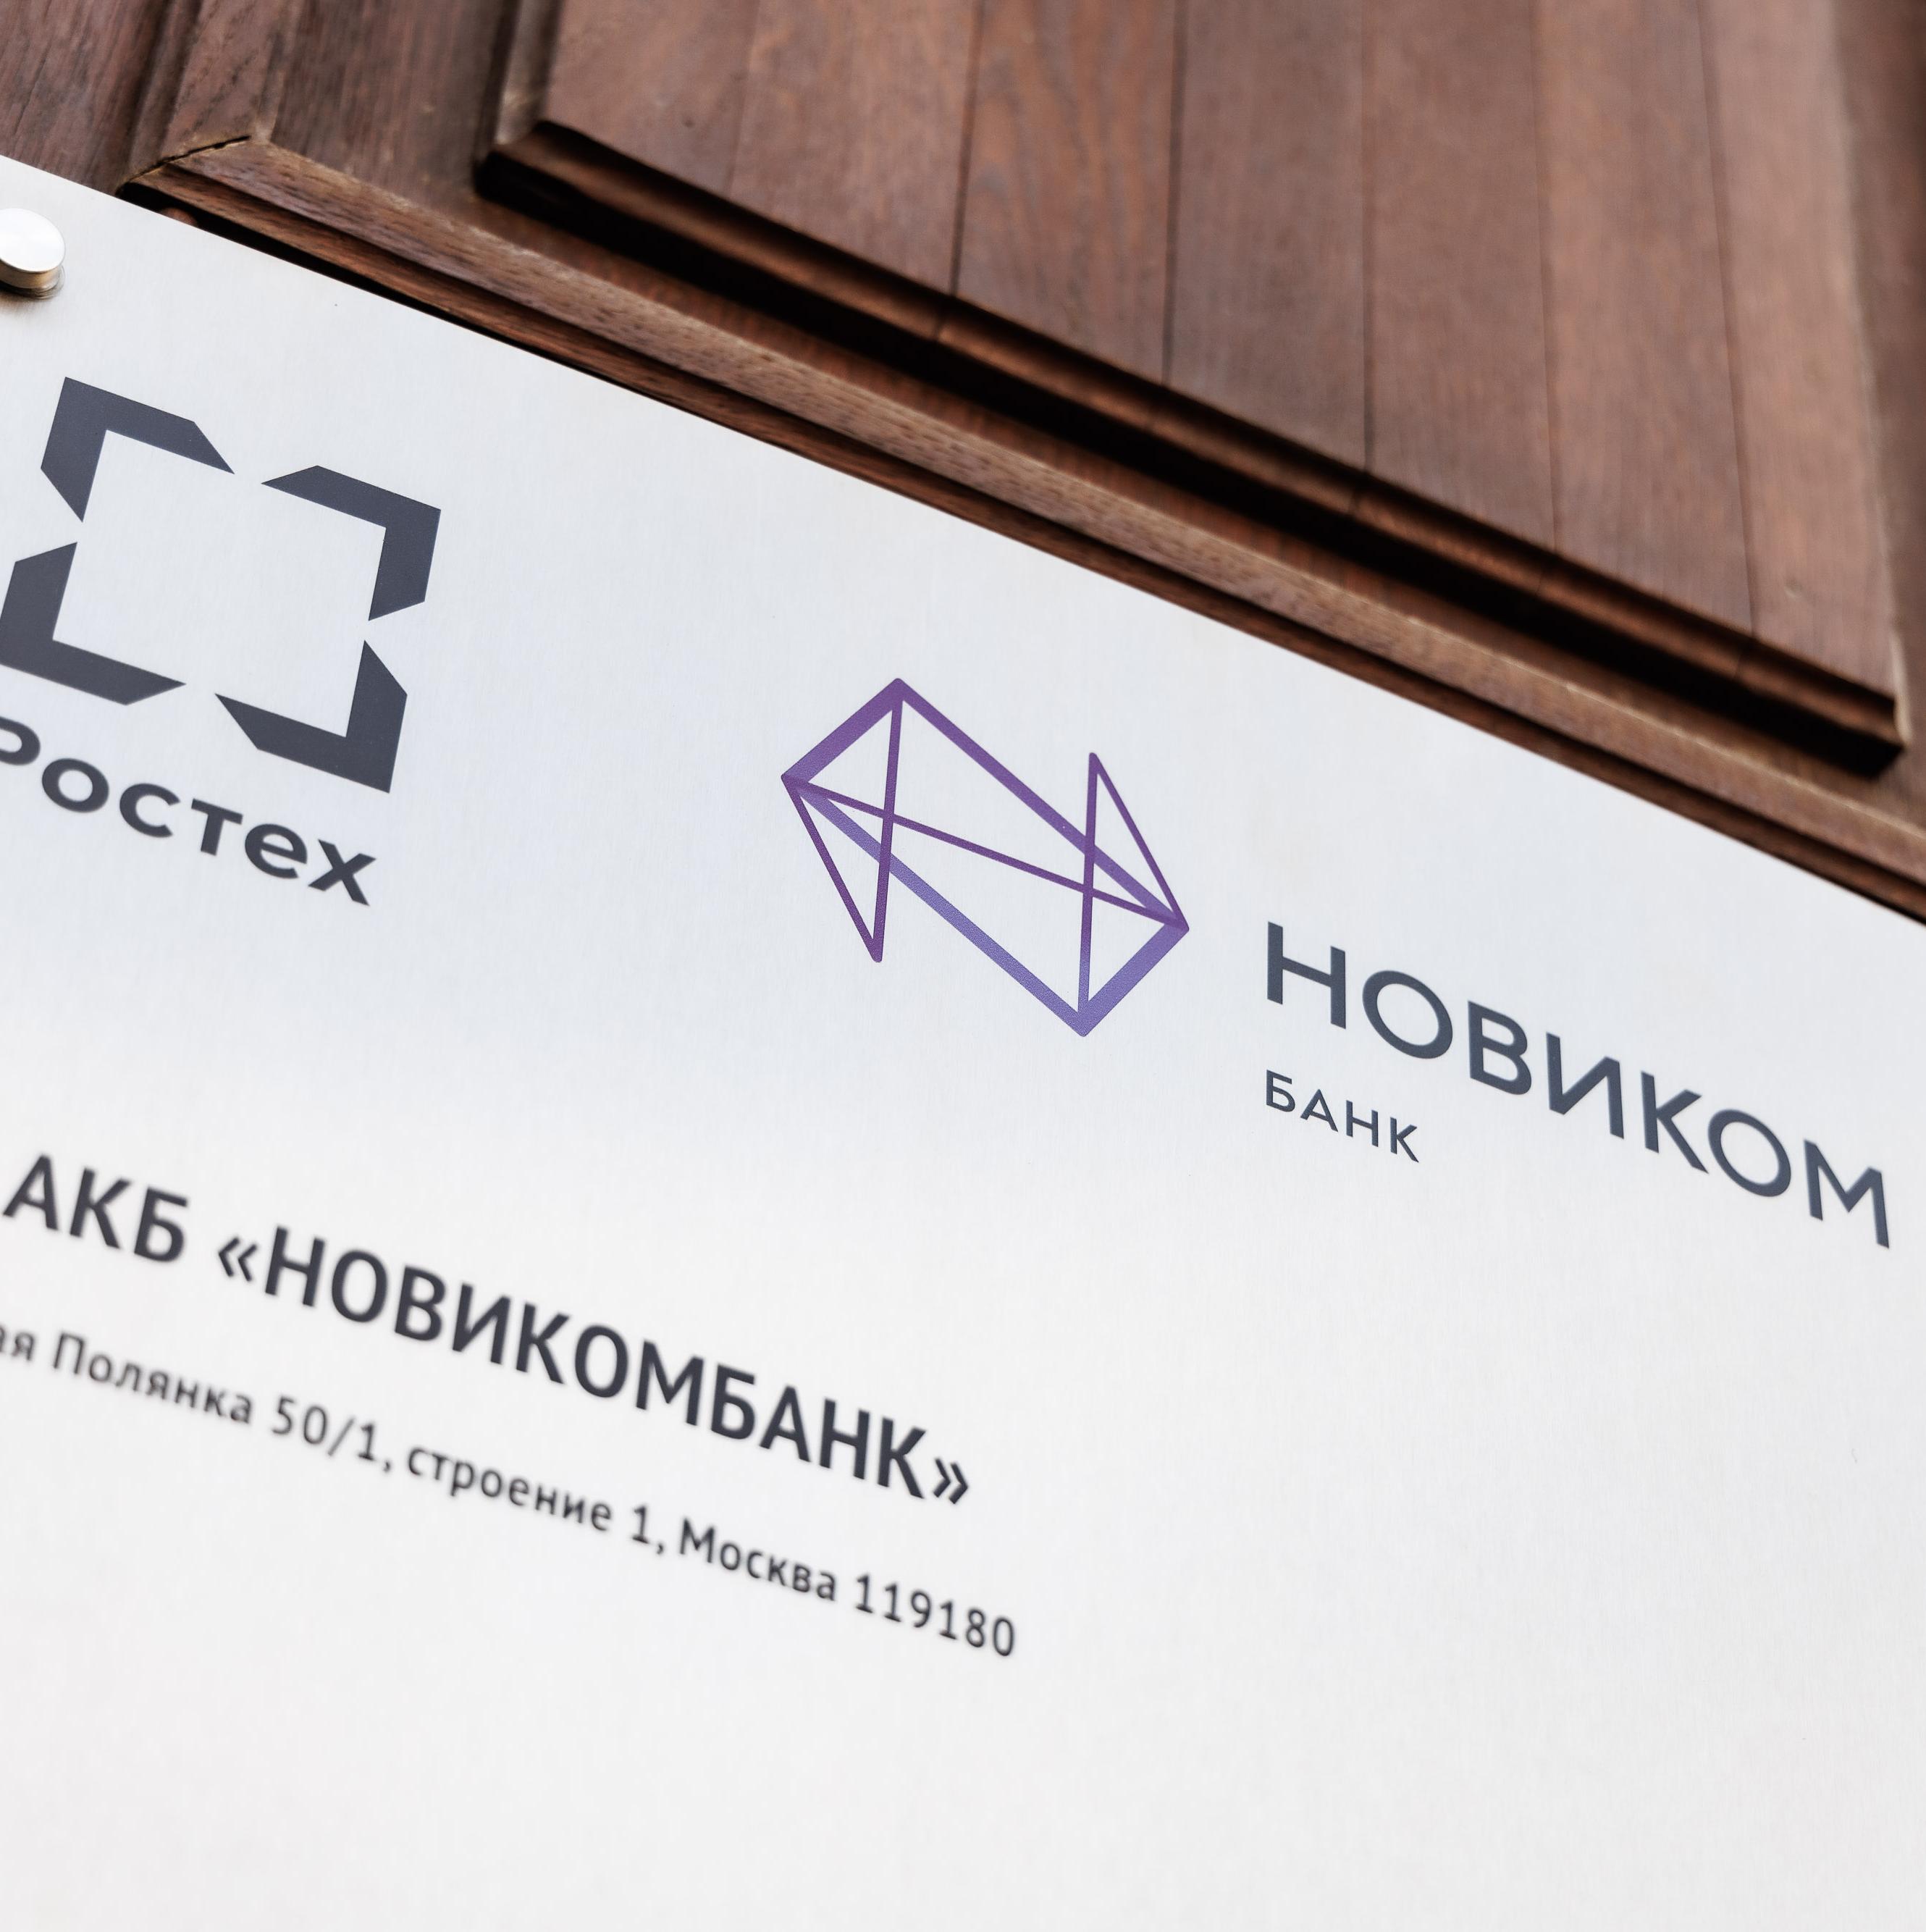 НКР подтвердило рейтинг НОВИКОМа на уровне AA-.ru